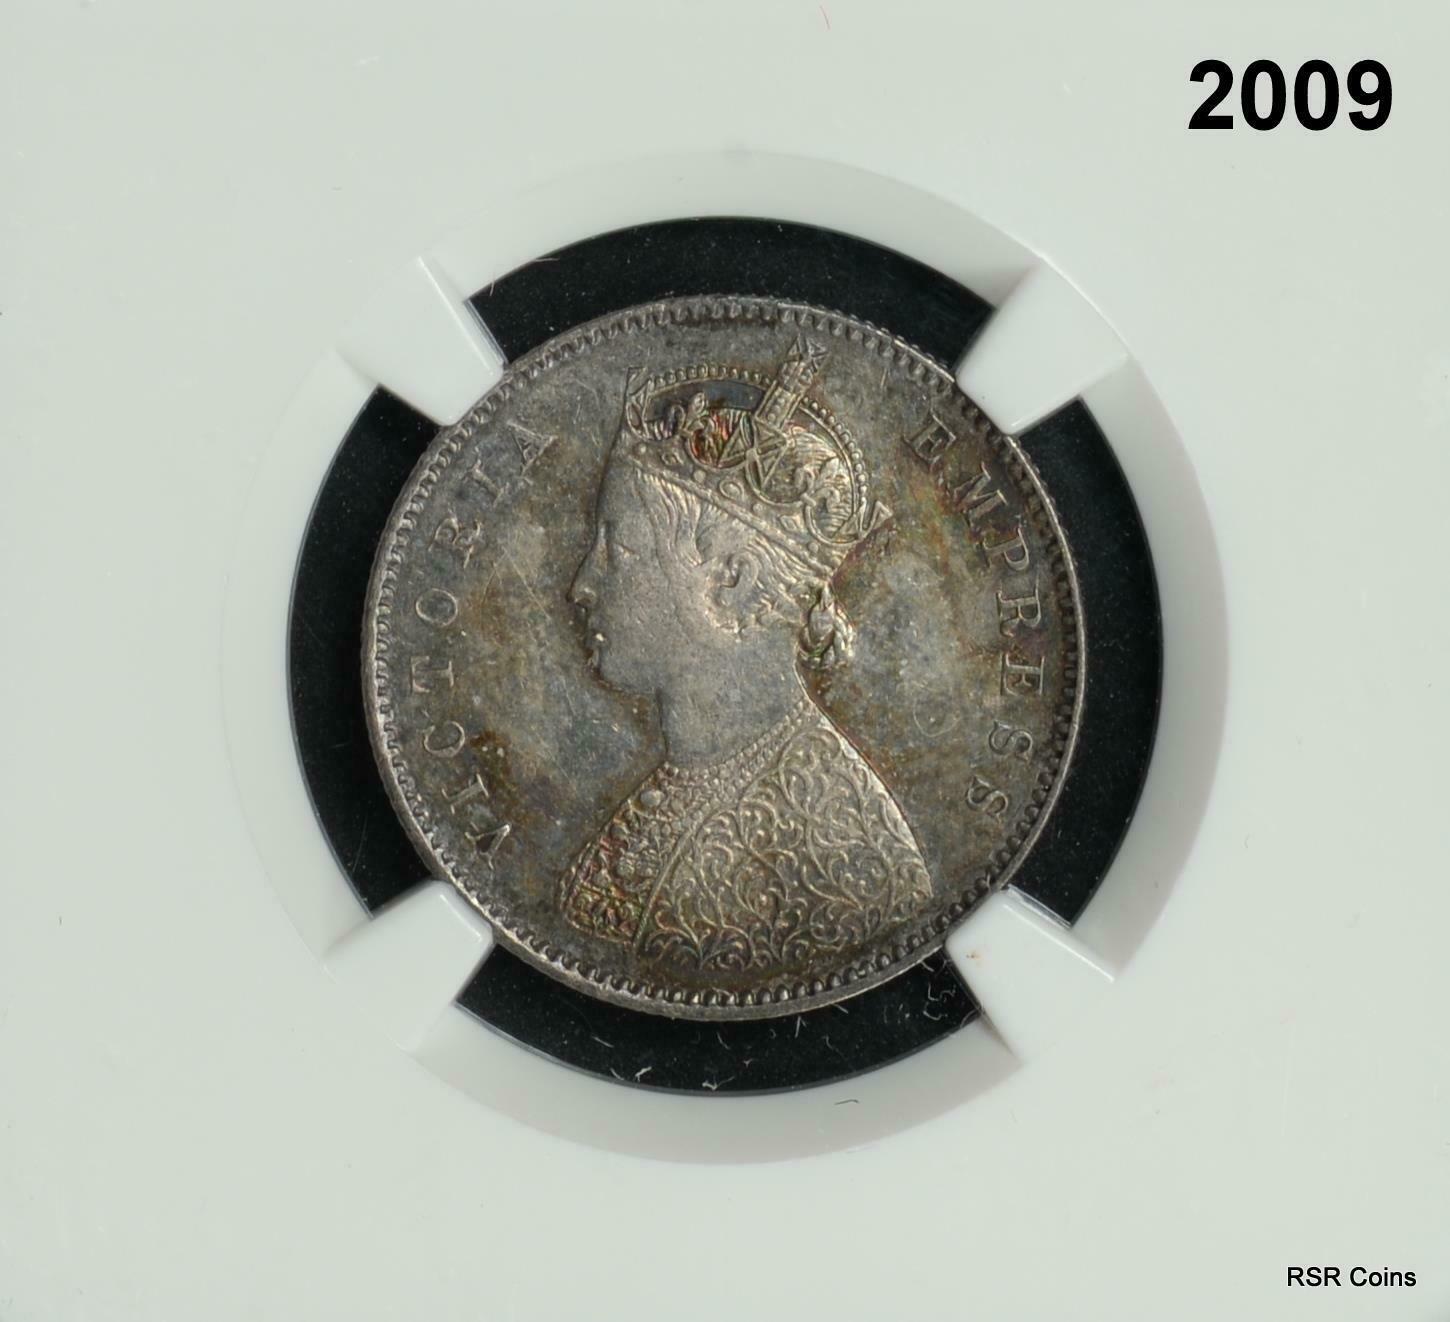 1899C INDIA 1/2 RUPEE  NGC CERTIFIED XF 45  # 2009